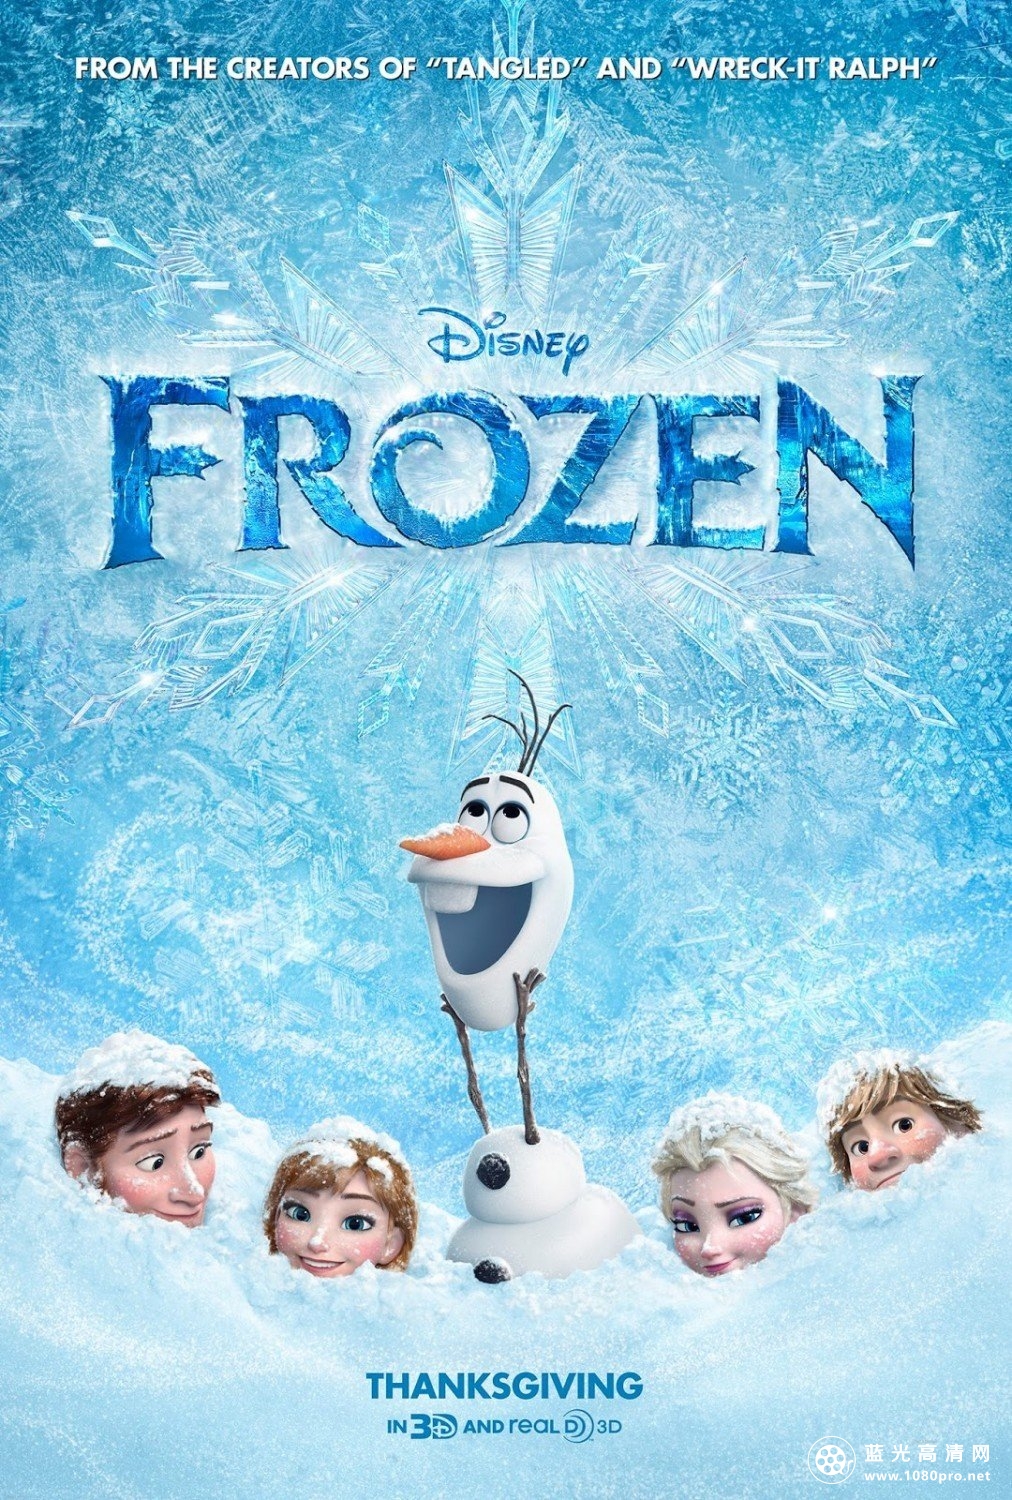 冰雪奇缘 Frozen.2013.BluRay.1080p.x264.DTS-HD.MA.7.1-HDWinG 10.42 GB-1.jpg